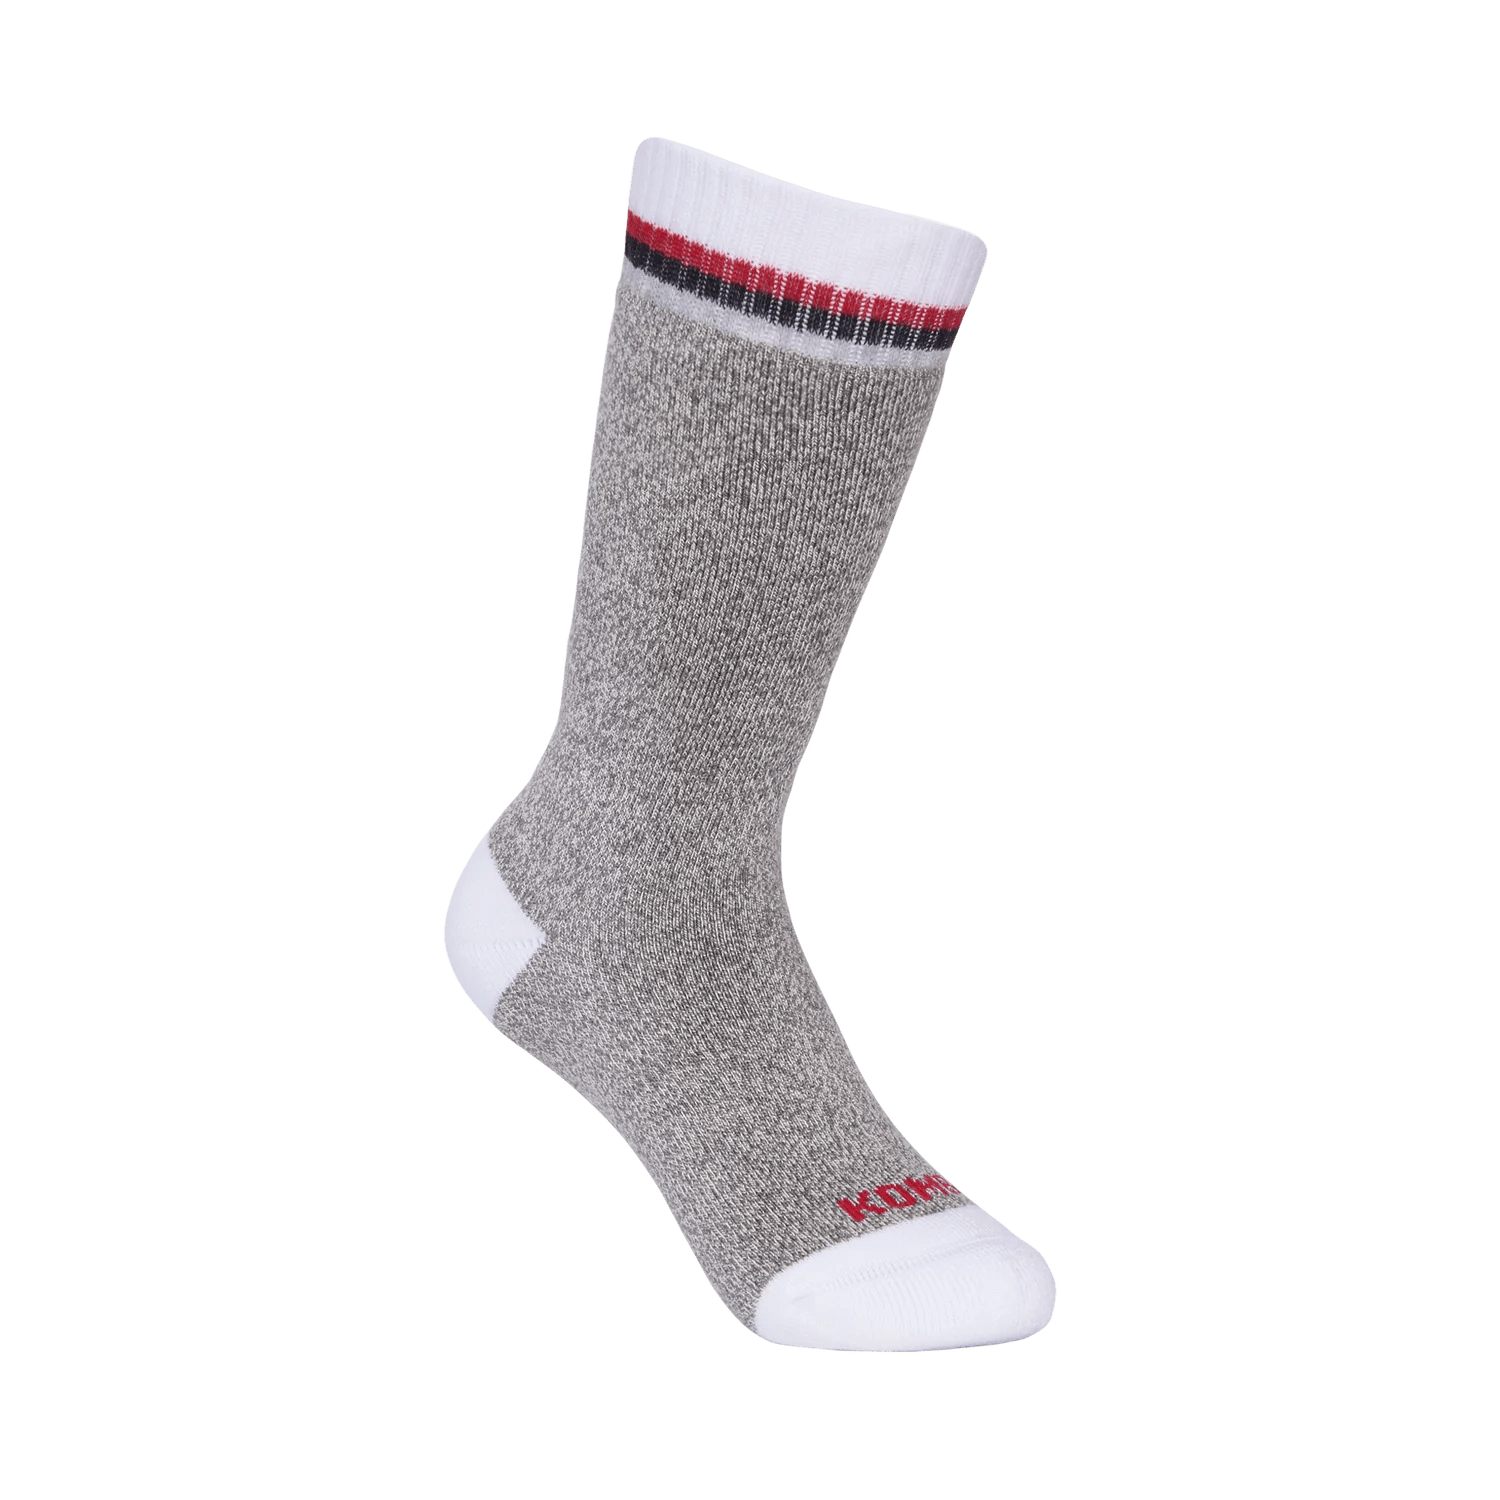 Kids Socks: Comfort and Style for Little Feet